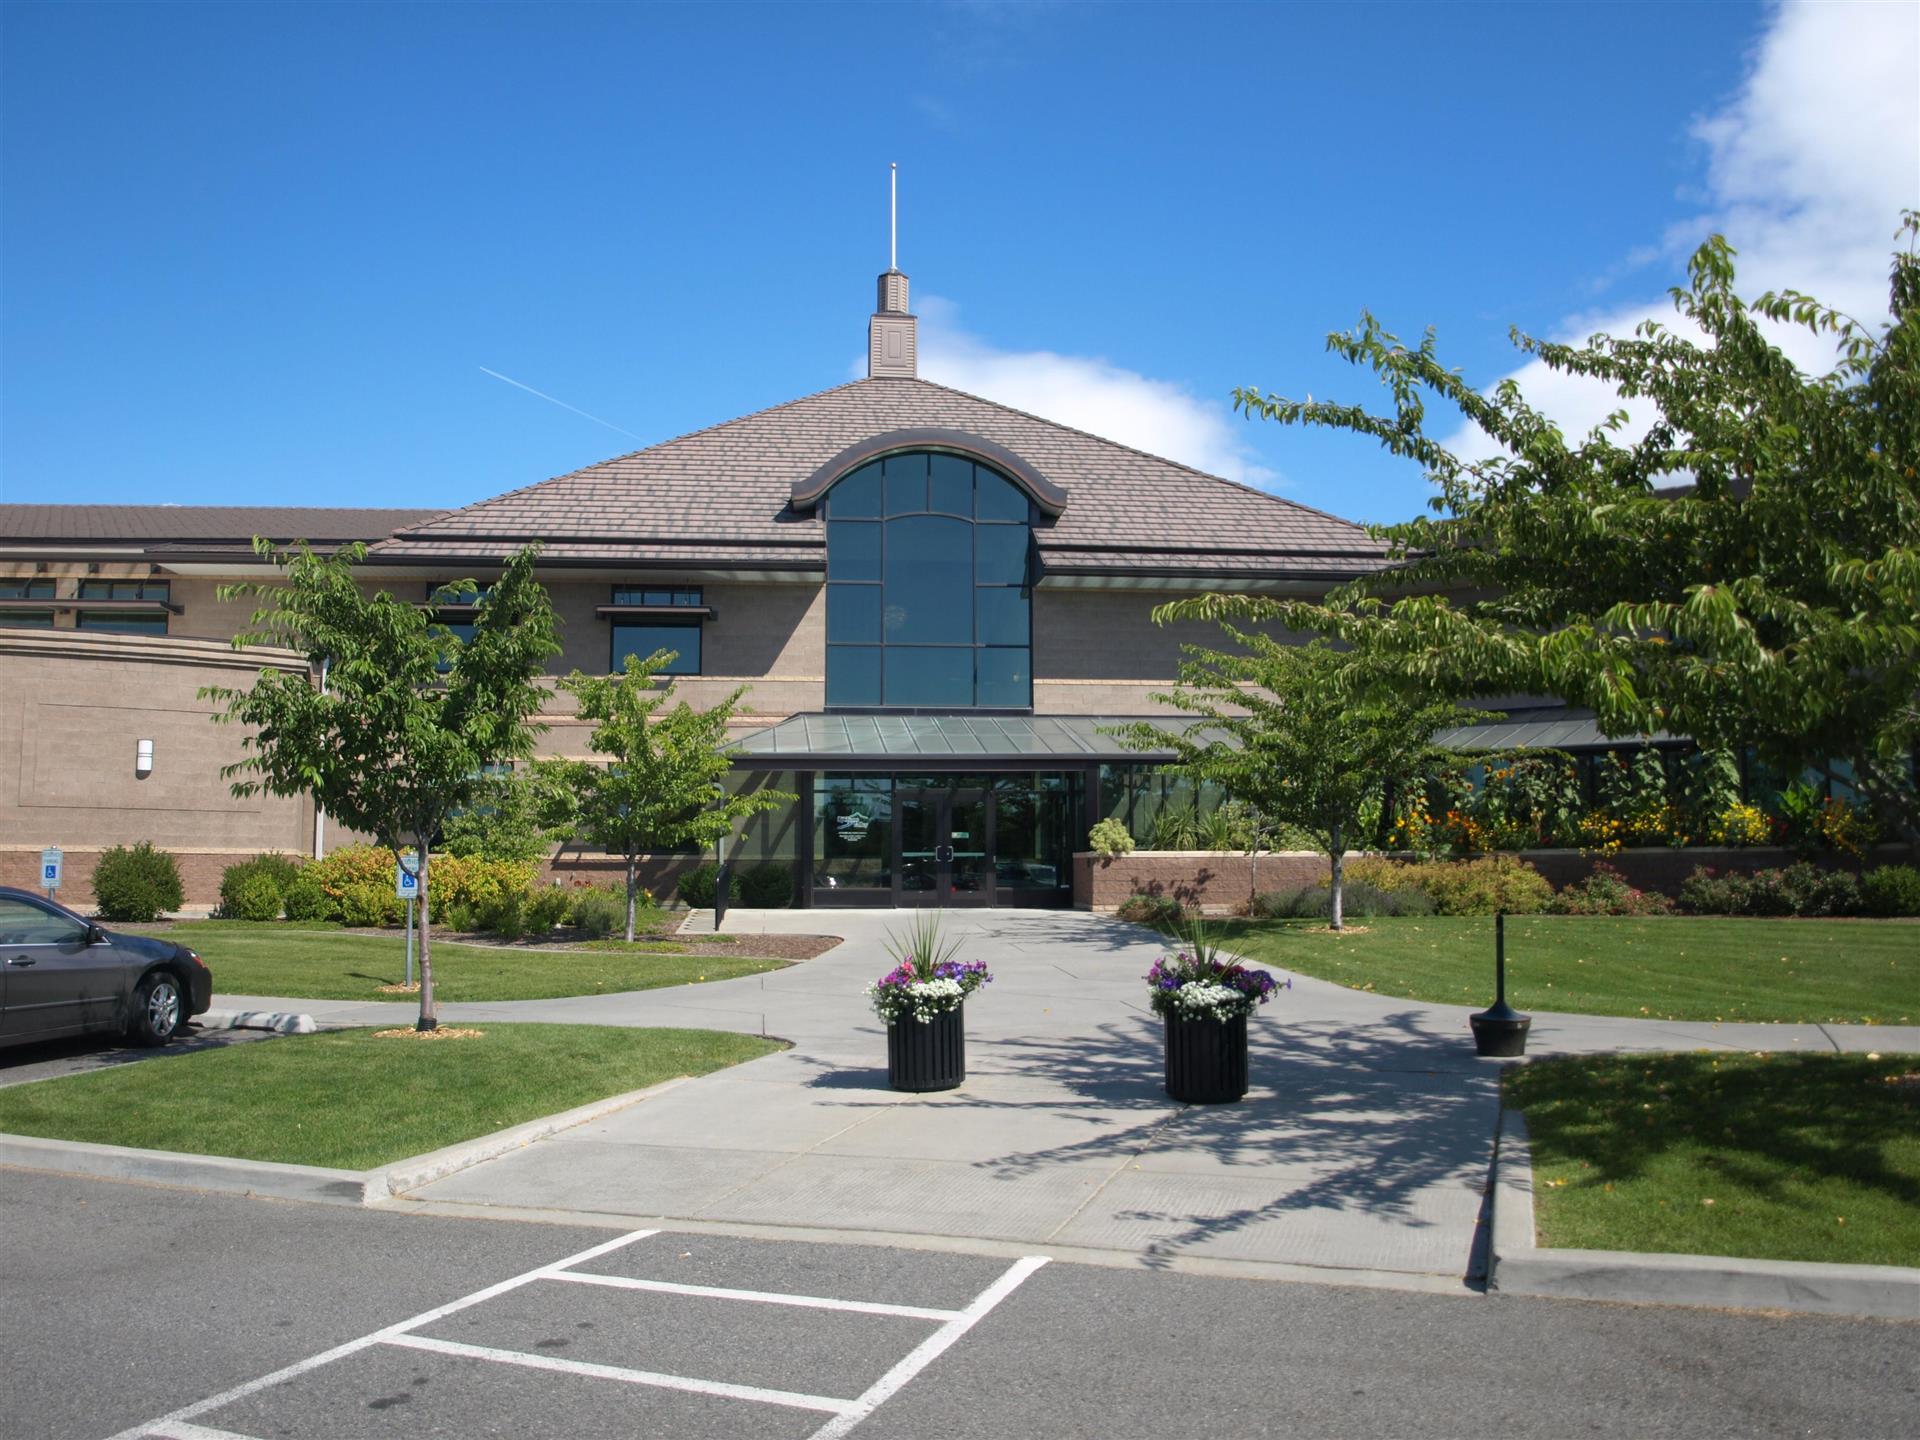 Centerplace Regional Event Center in Spokane Valley, WA